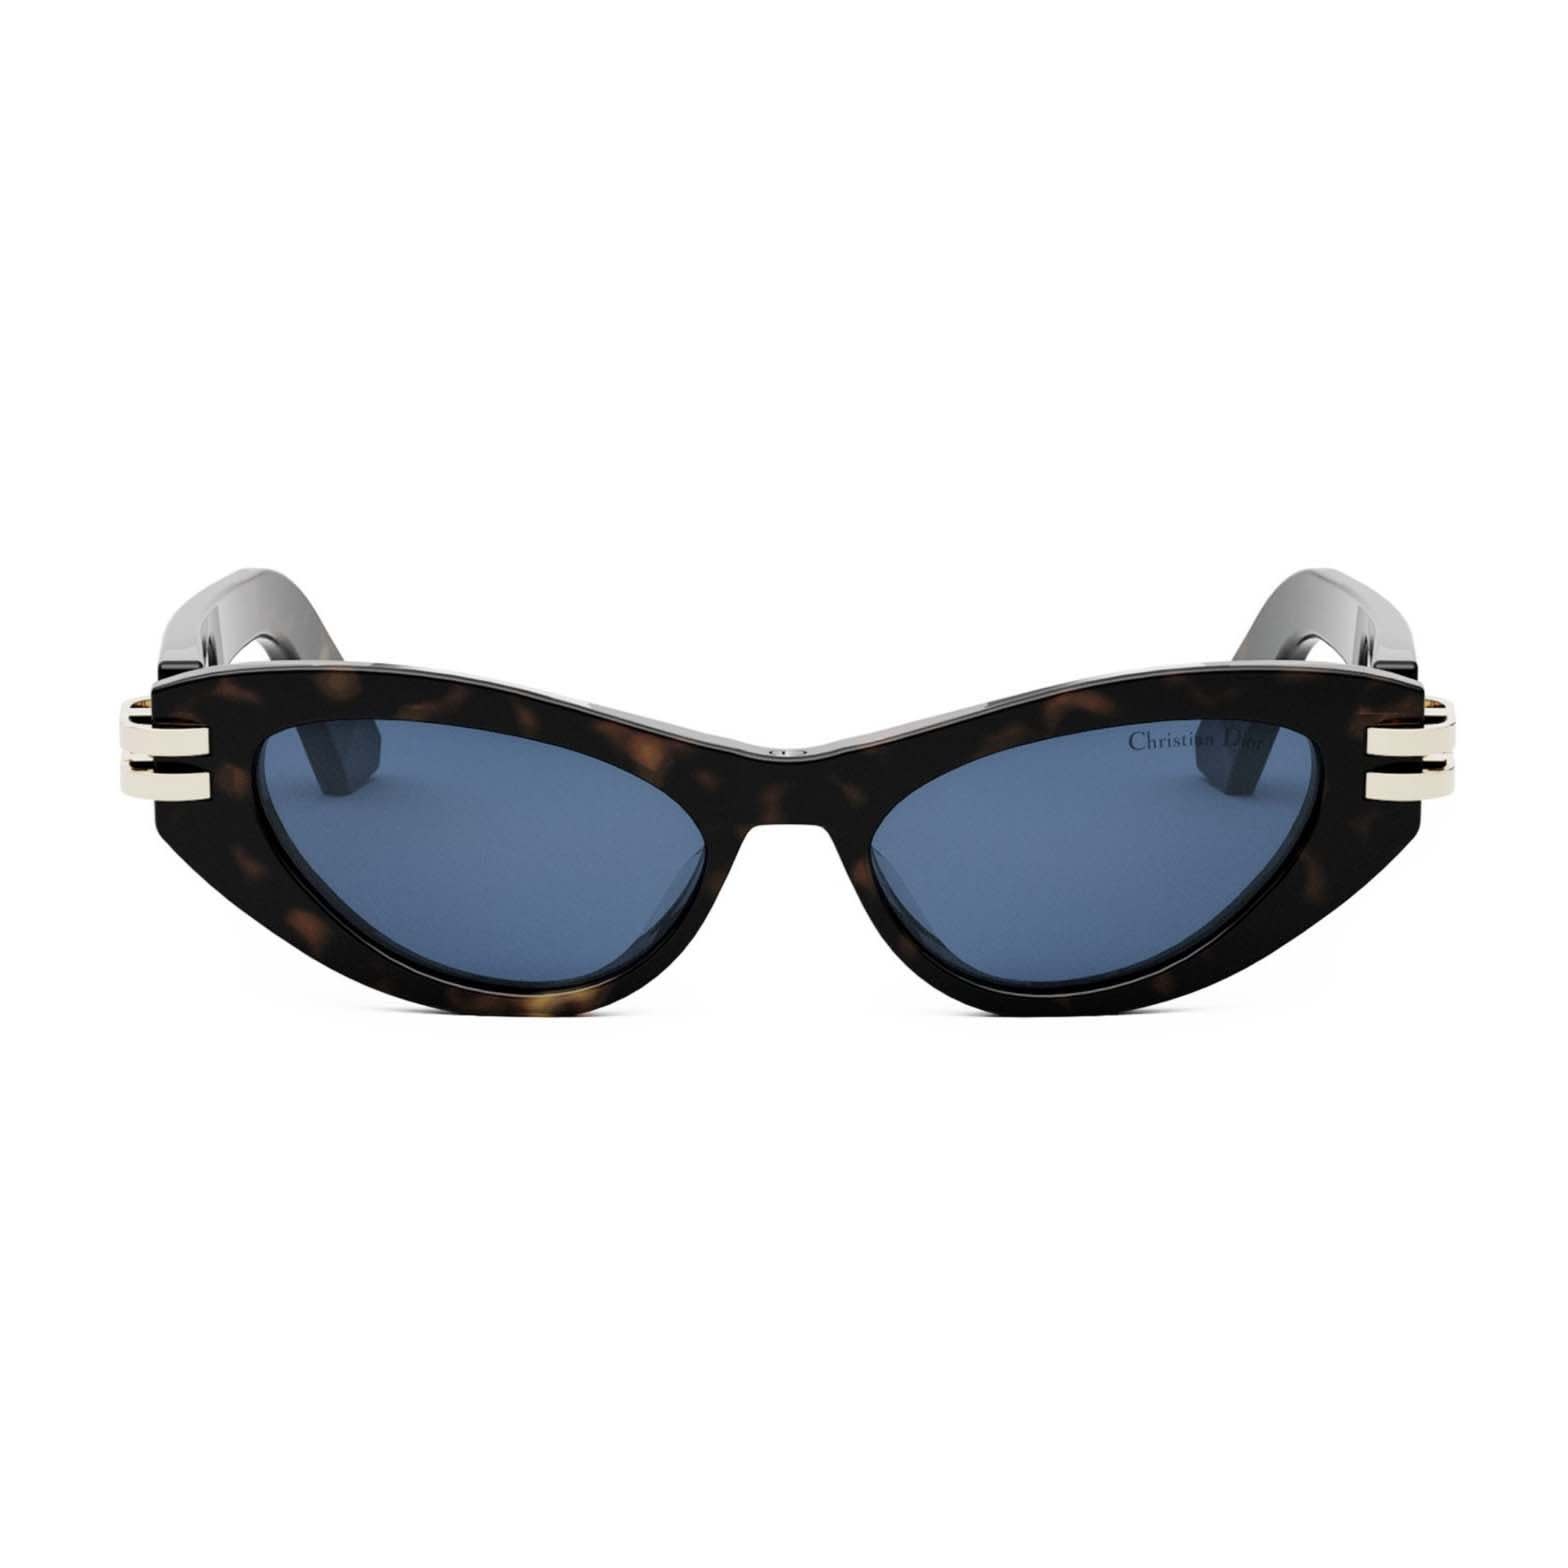 Dior Eyewear Sunglasses